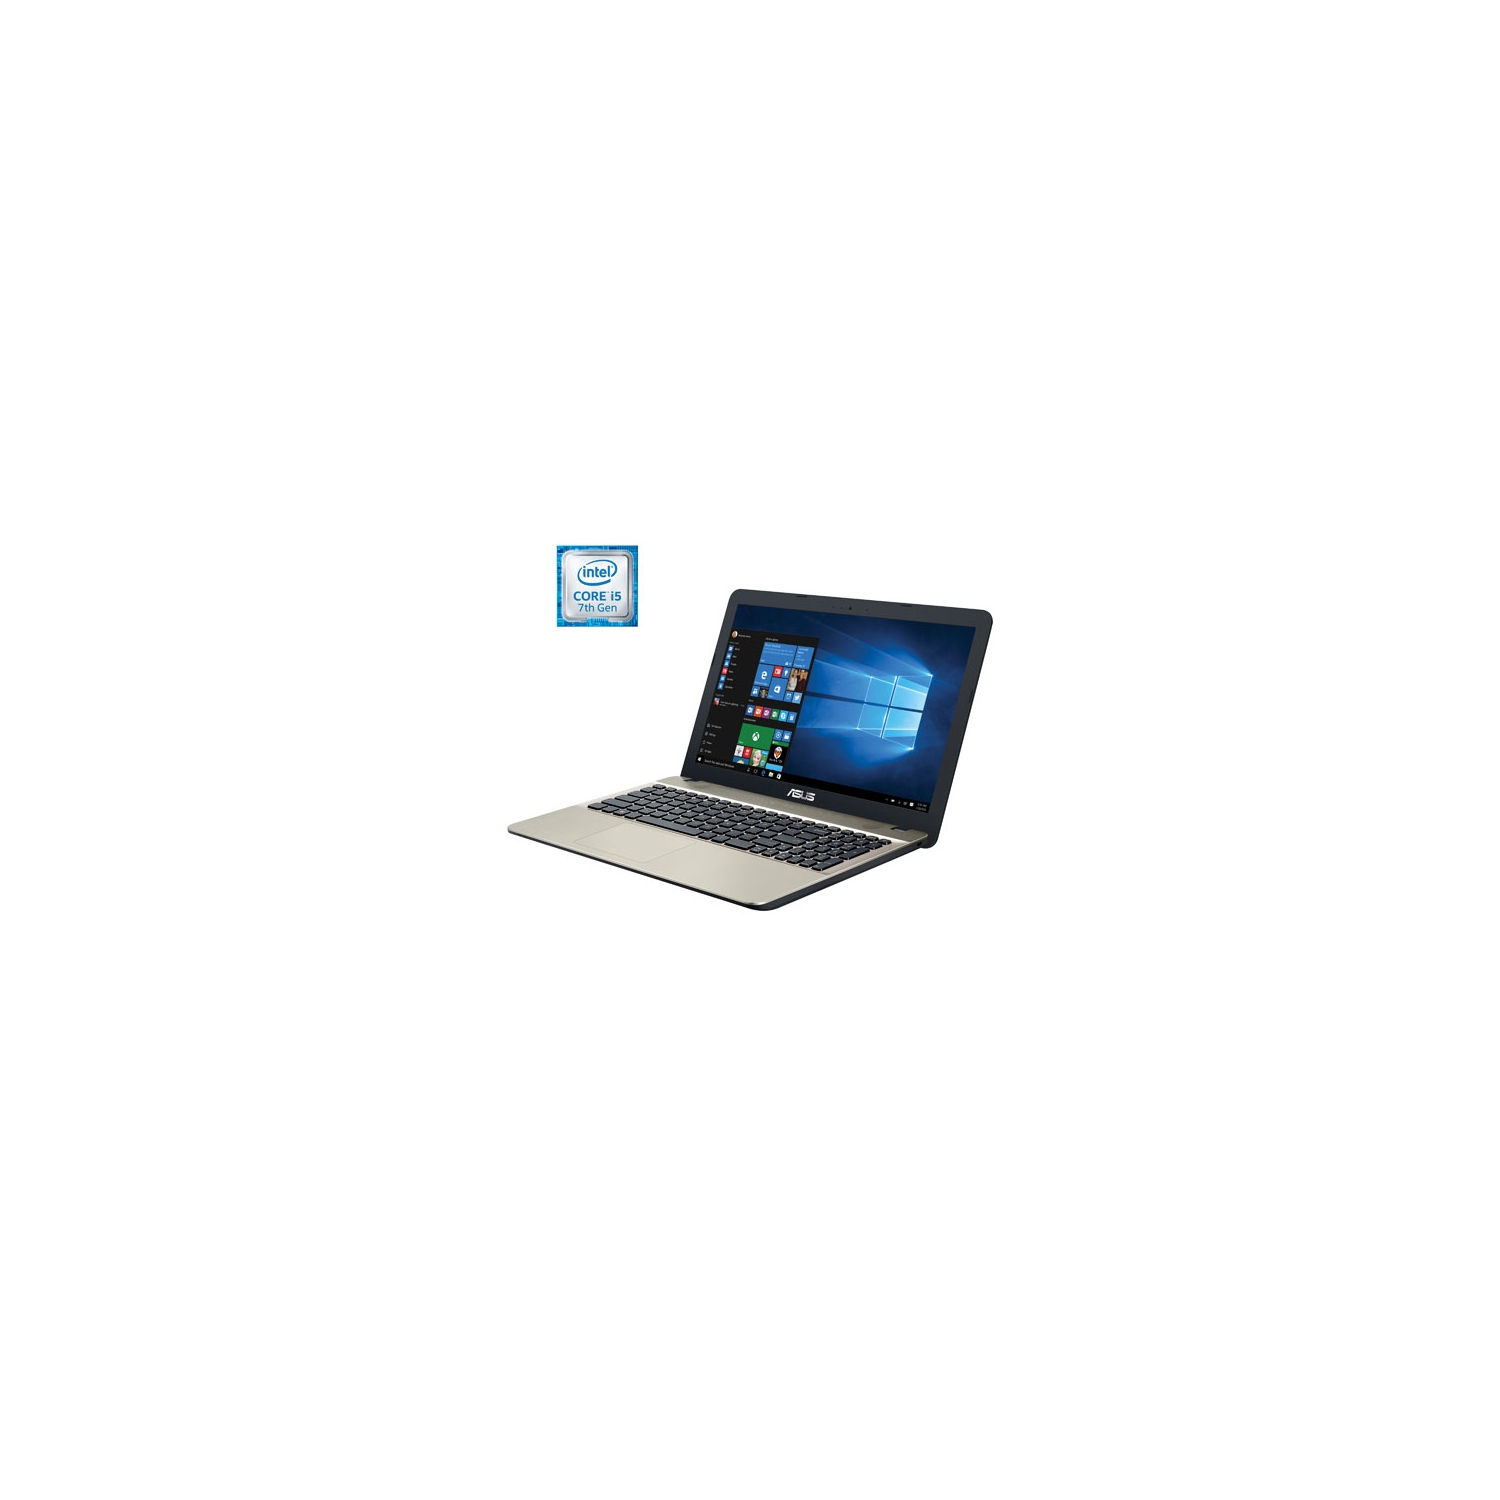 Refurbished (Good) - ASUS VivoBook X541UA Slim 15.6" Laptop - Chocolate Black/Gold (Intel Core i5-7200U/1TB HDD/8GB RAM)